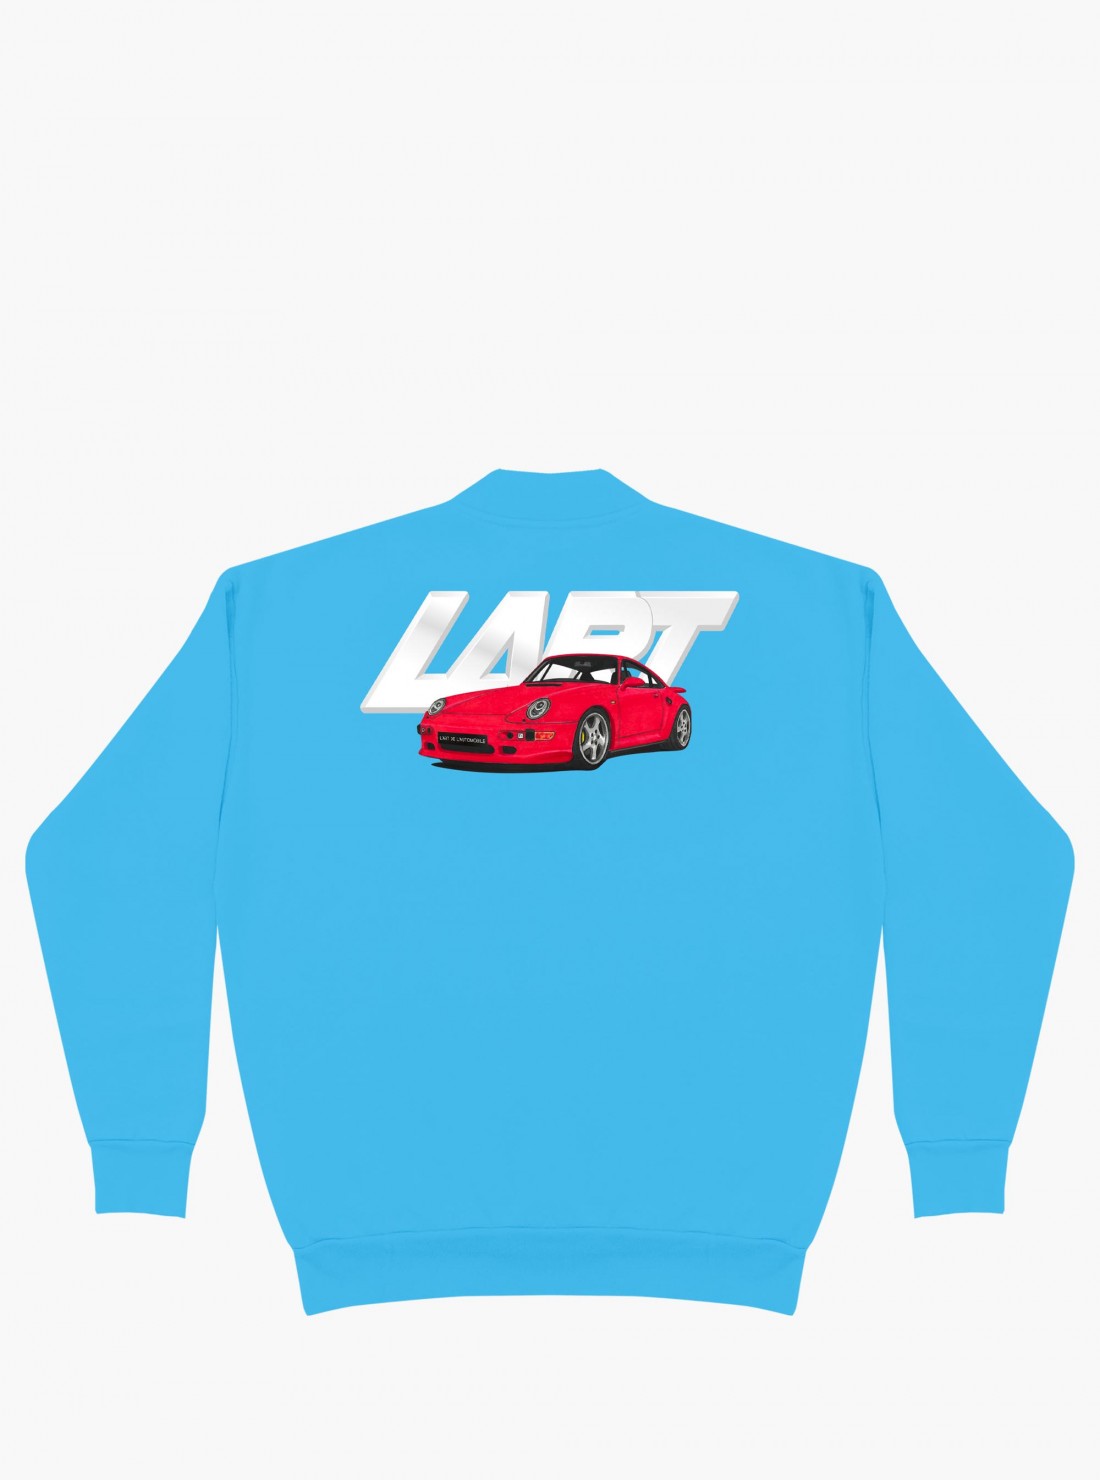 Sweatshirt L'art 993